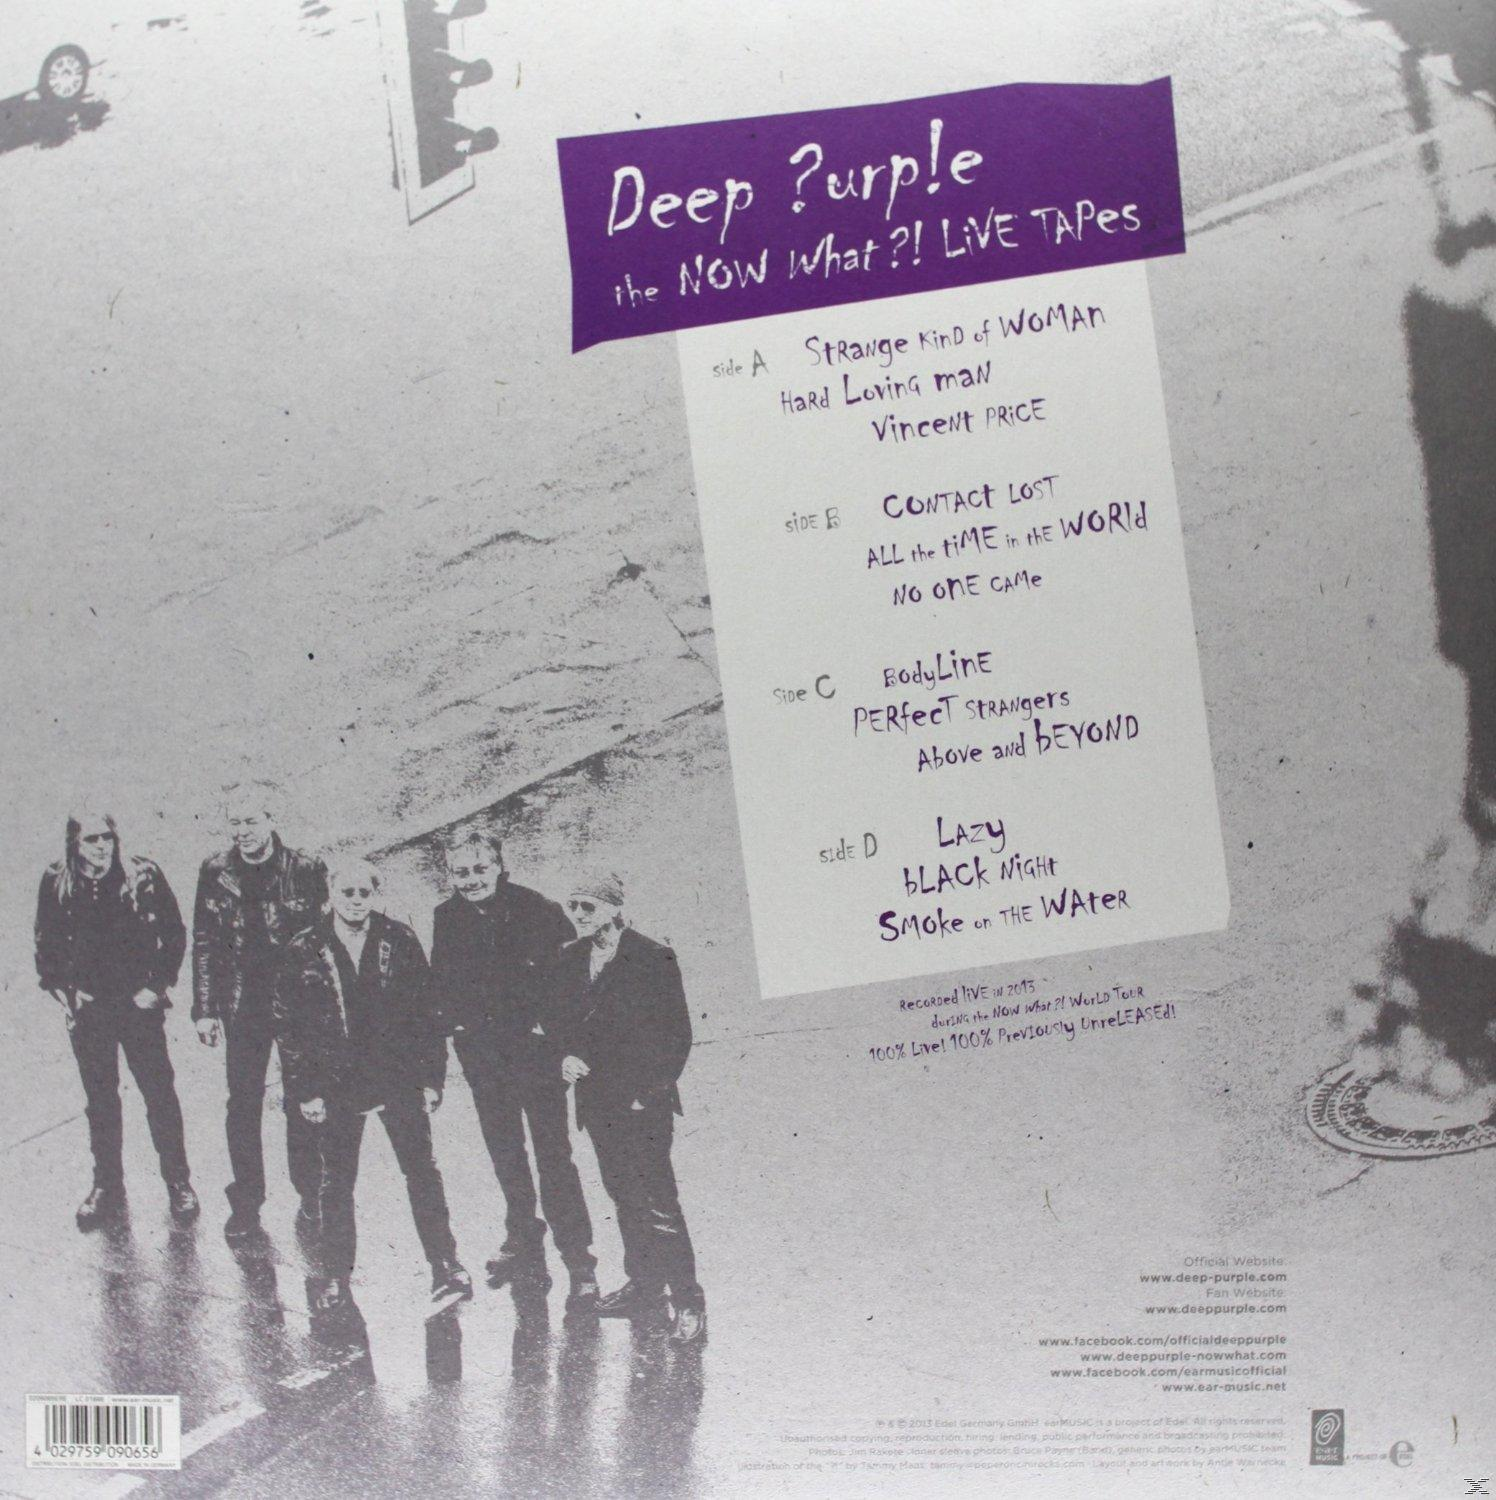 EDITION) (Vinyl) WHAT?! - - Deep NOW (GOLD Purple